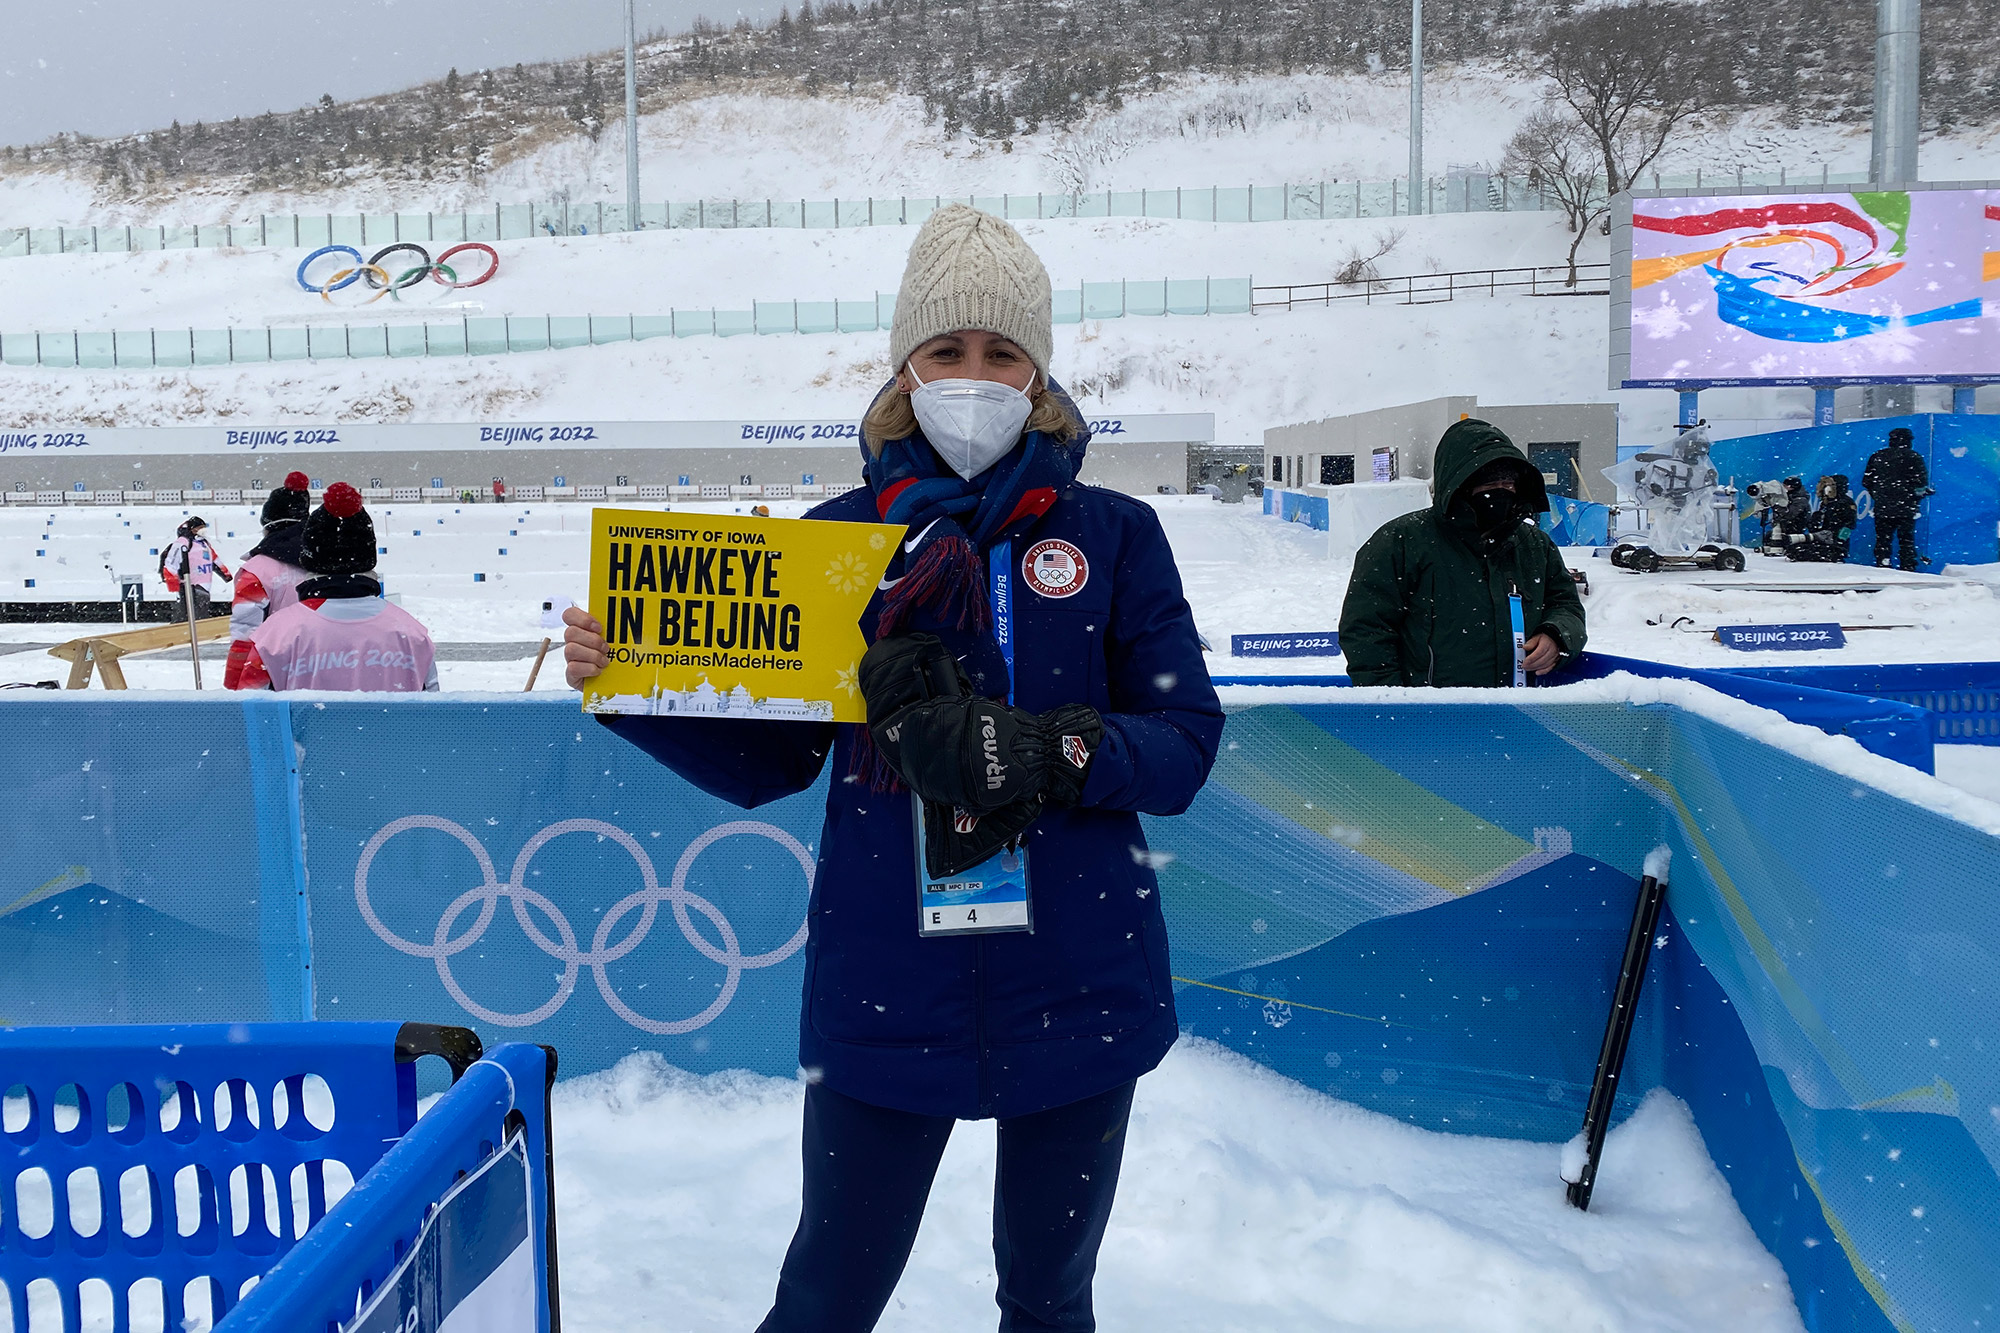 University of Iowa alumna Sarah Wilhelmi posing outdoors at the 2022 Winter Olympics in Beijing